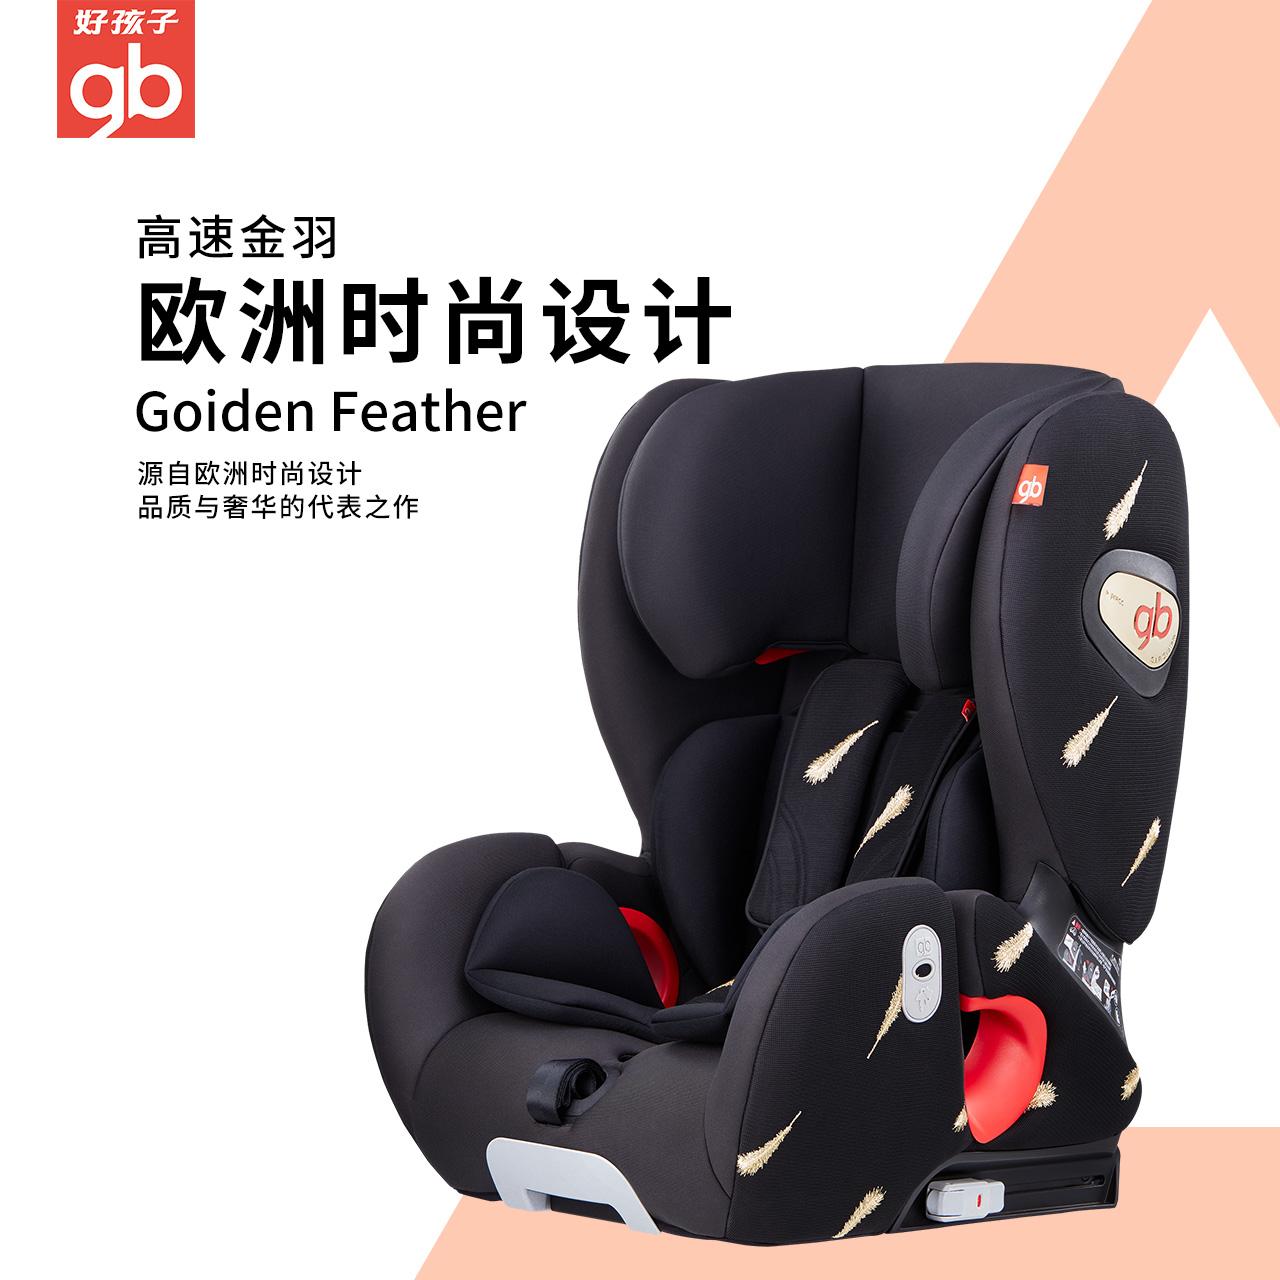 gb好孩子CS866高速汽车儿童安全座椅宝宝汽车用9个月-12岁CS816